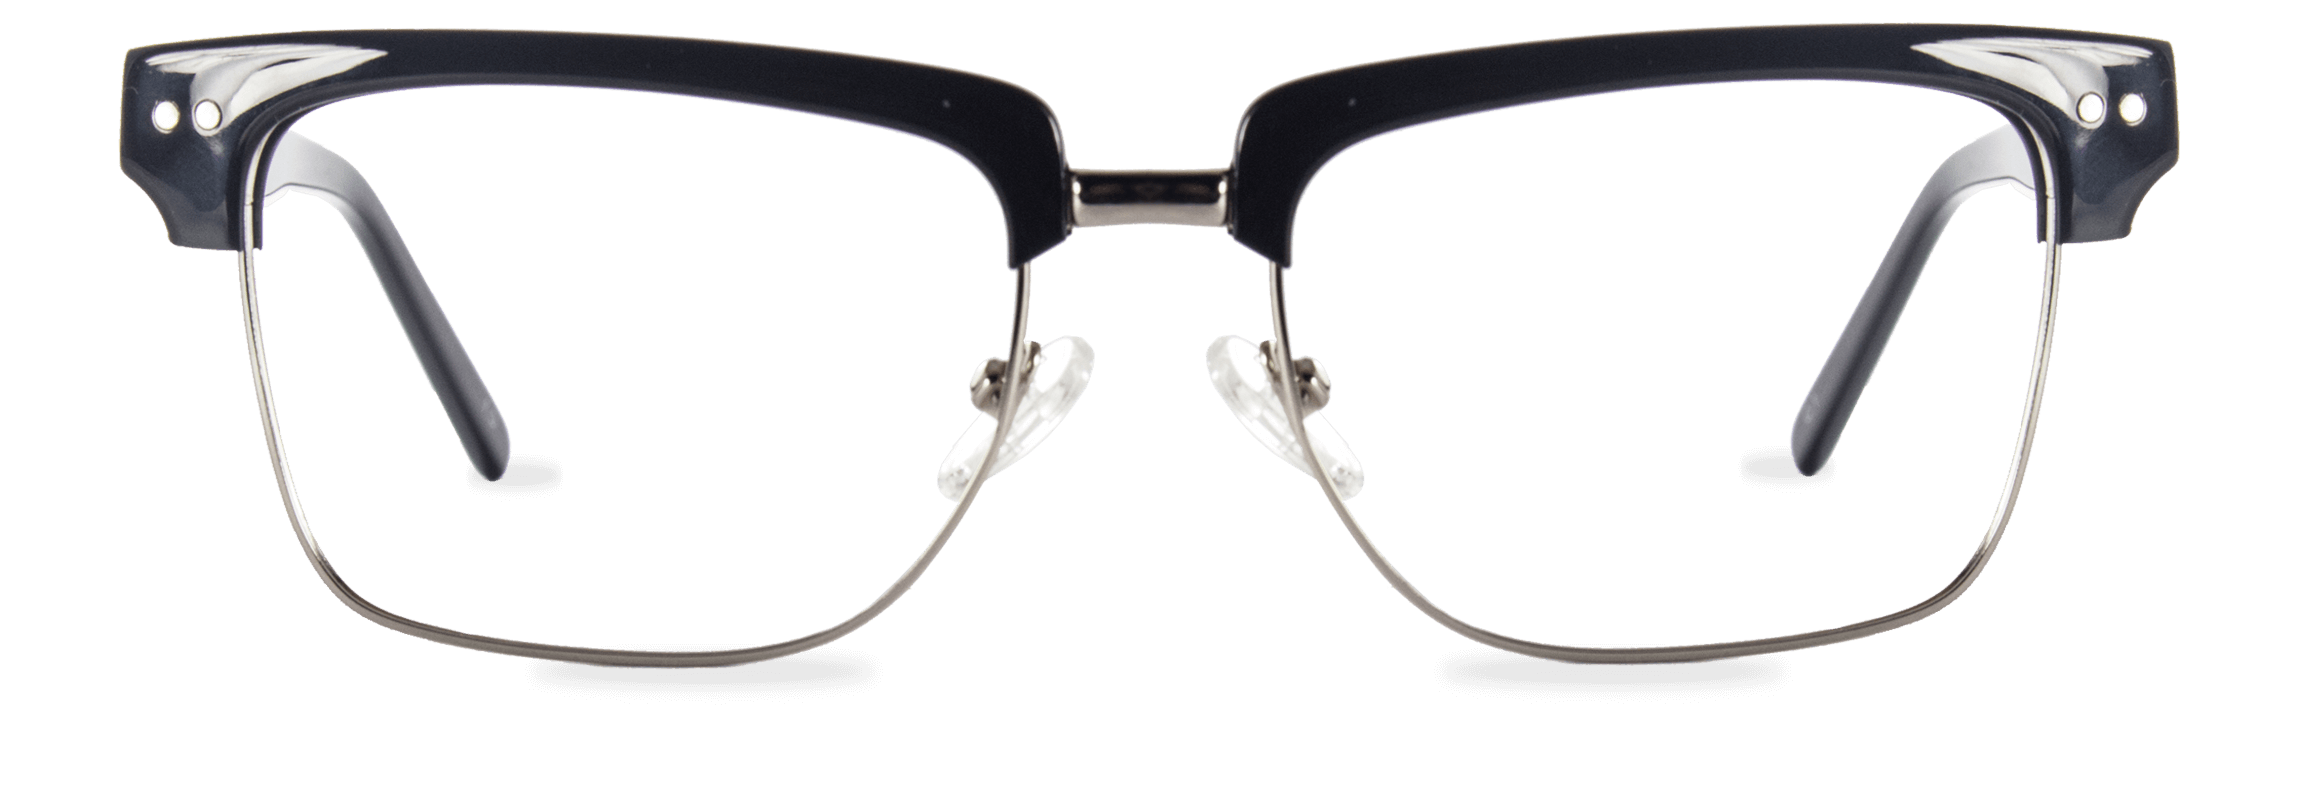 Goggles Sunglasses Glasses Free Transparent Image HQ Clipart